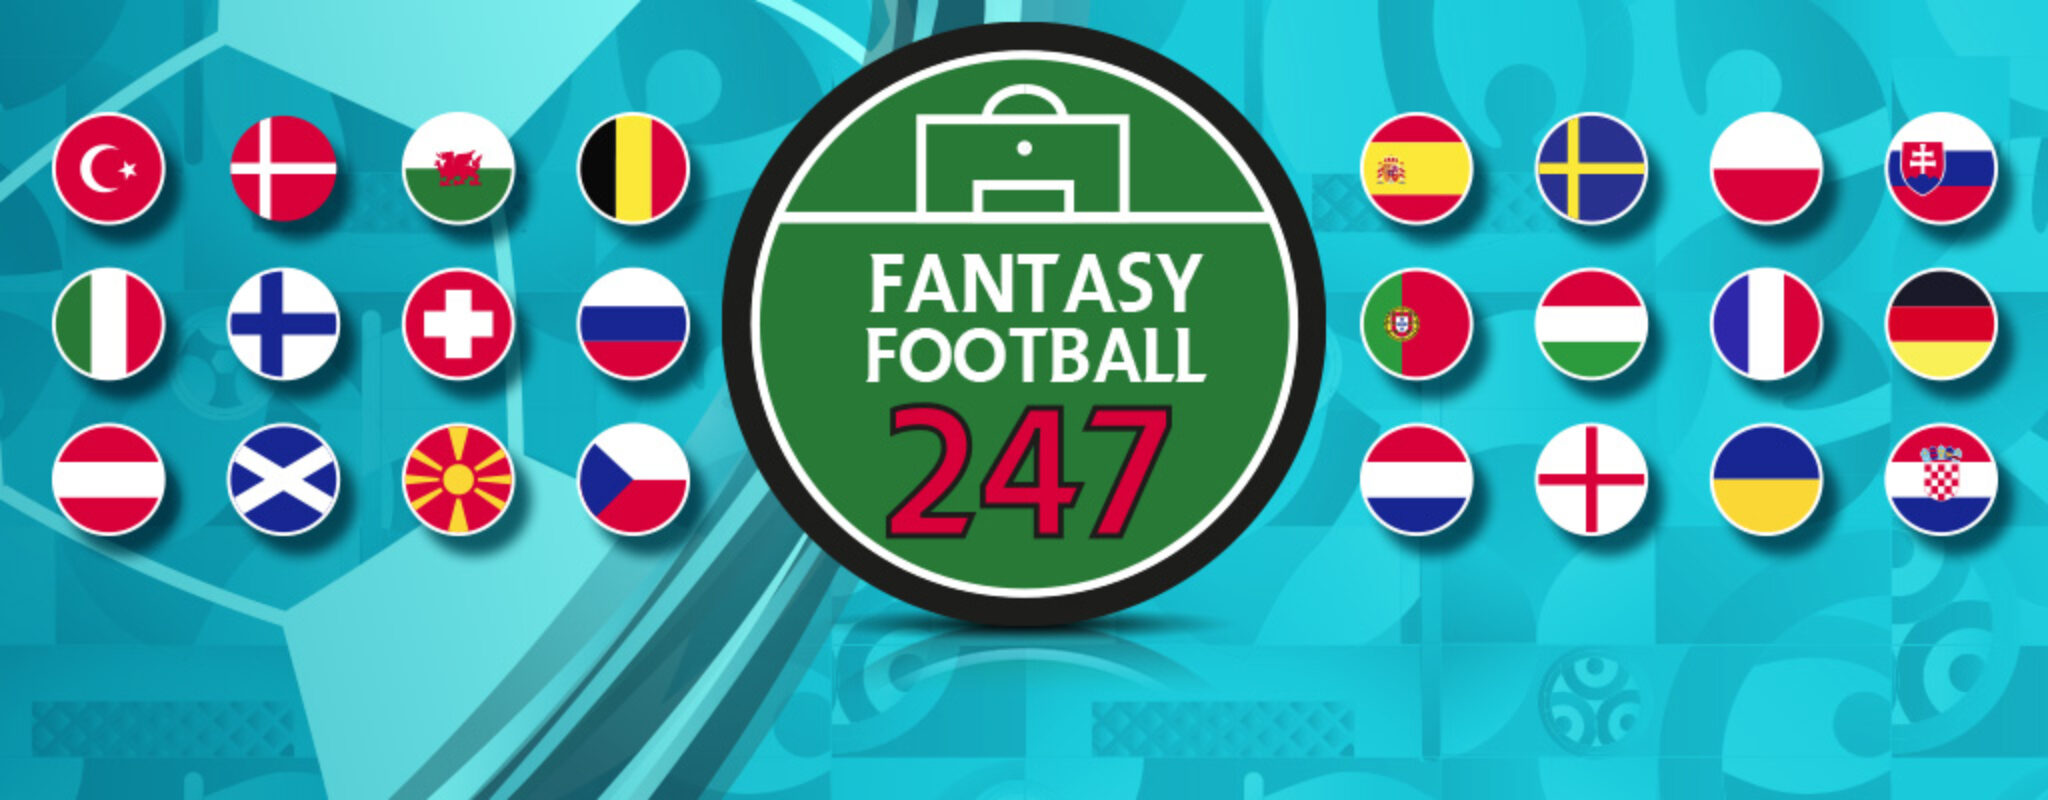 Football euro fantasy Download UEFA